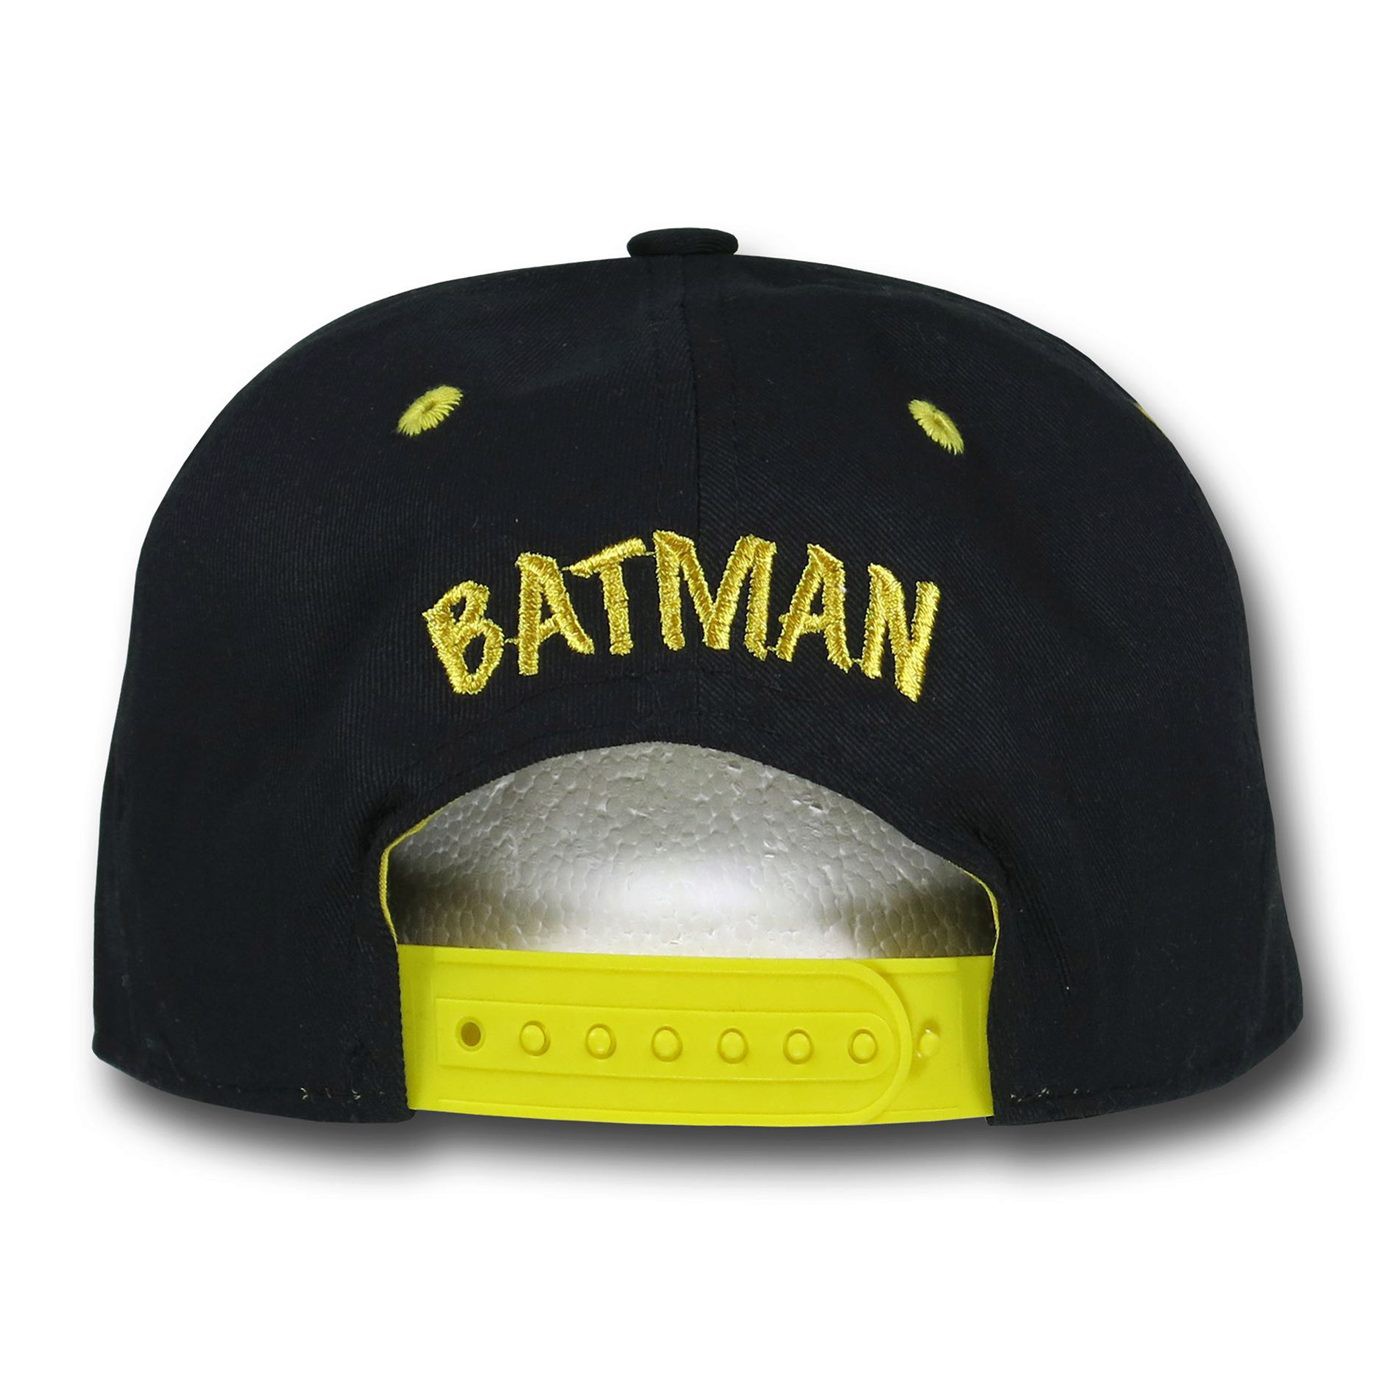 Batman Black & Yellow Sublimated Flat Billed Hat